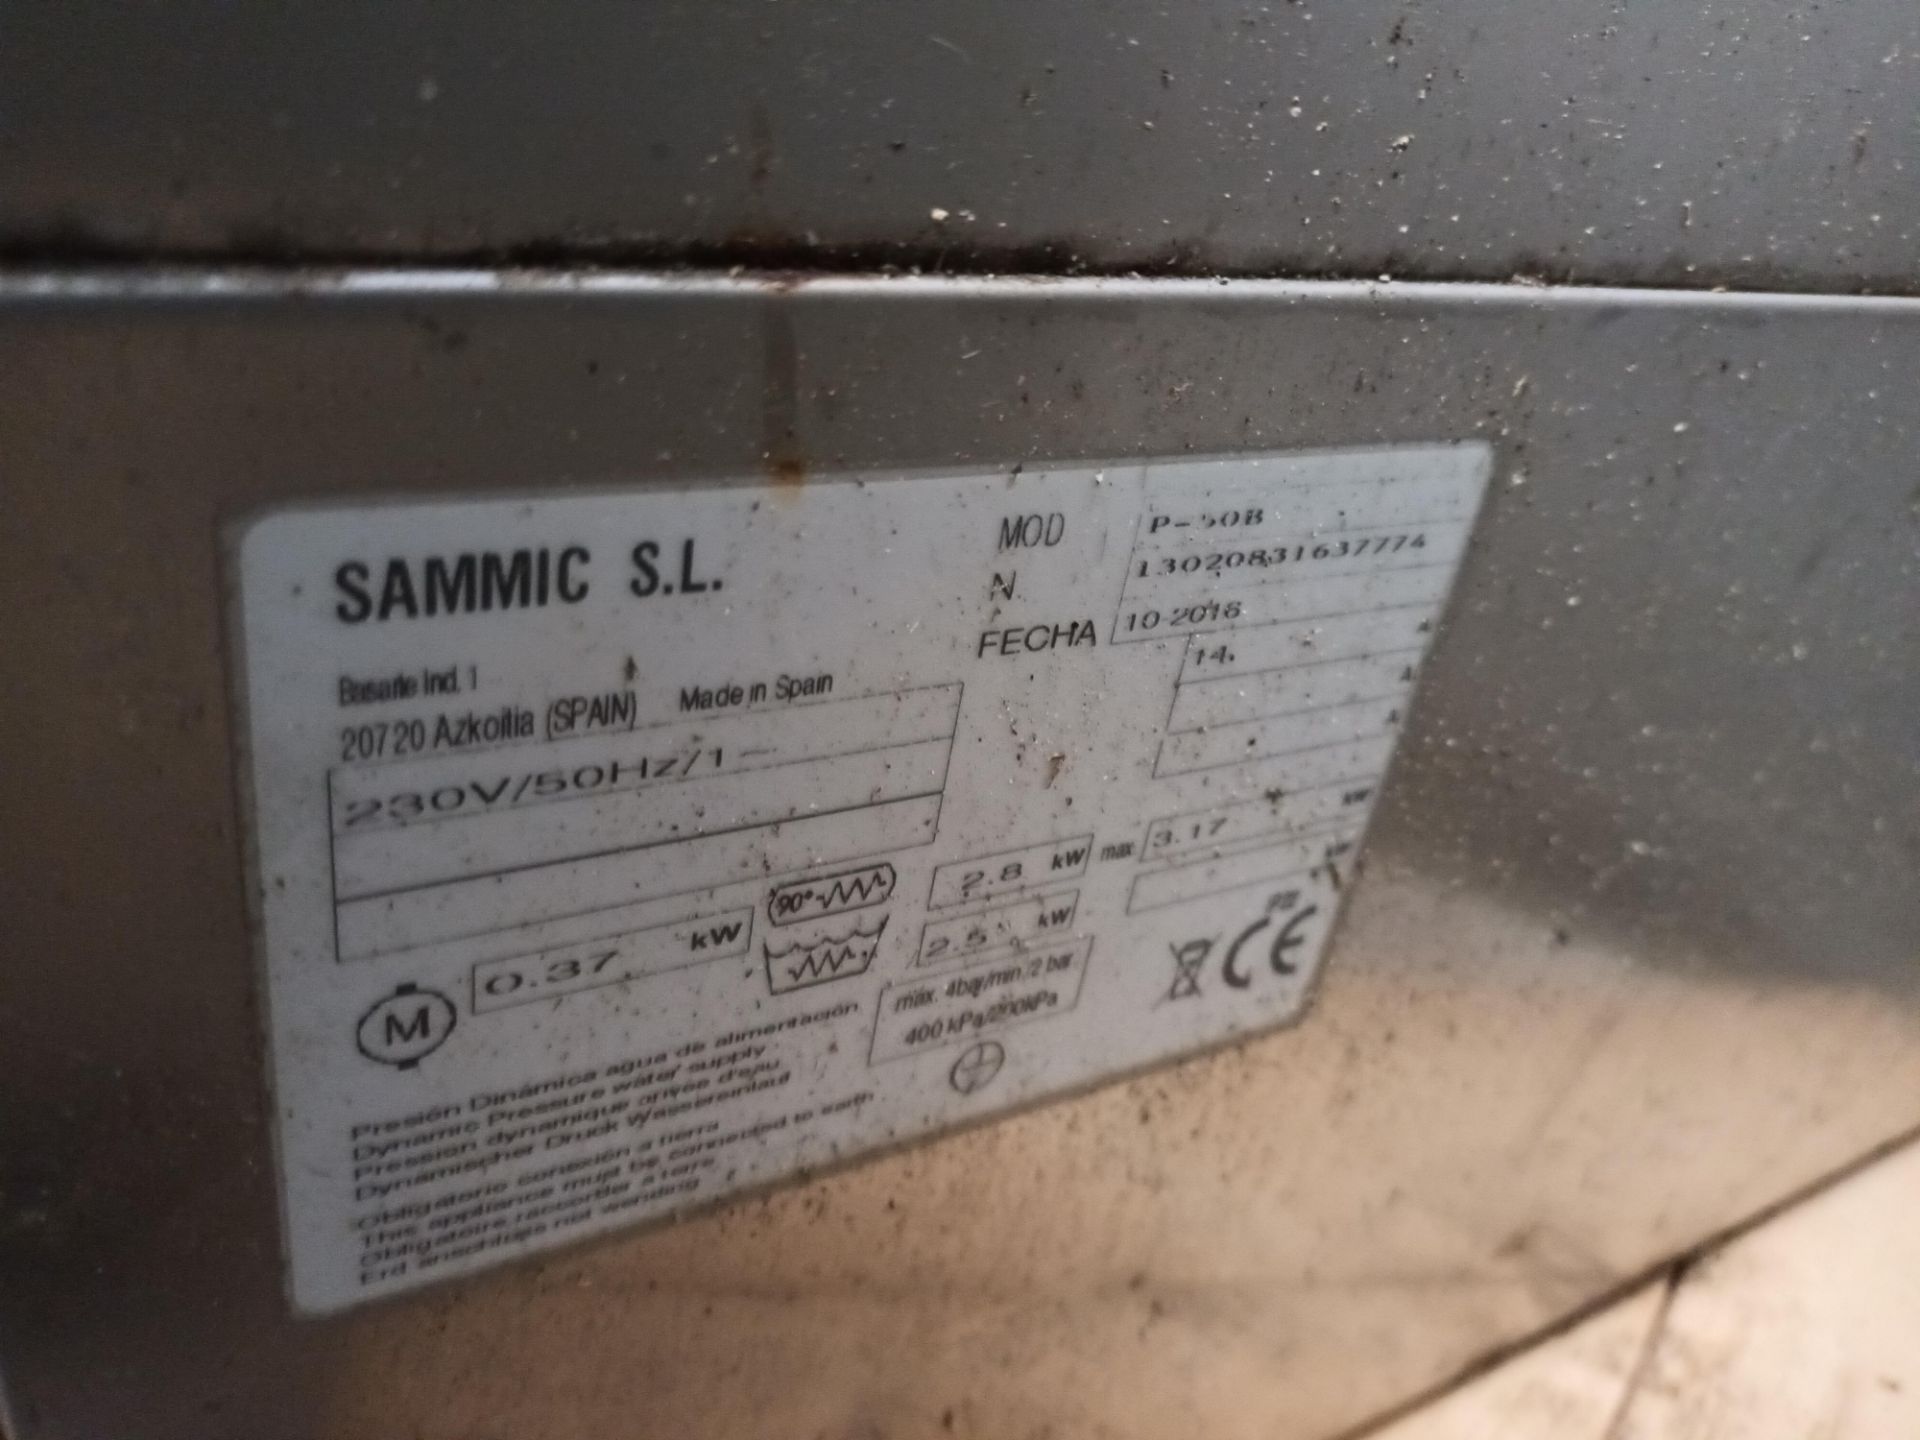 Sammic 20720 Azkoiltia stainless steel under-counter dishwasher (Located: Hanslope) - Image 3 of 3